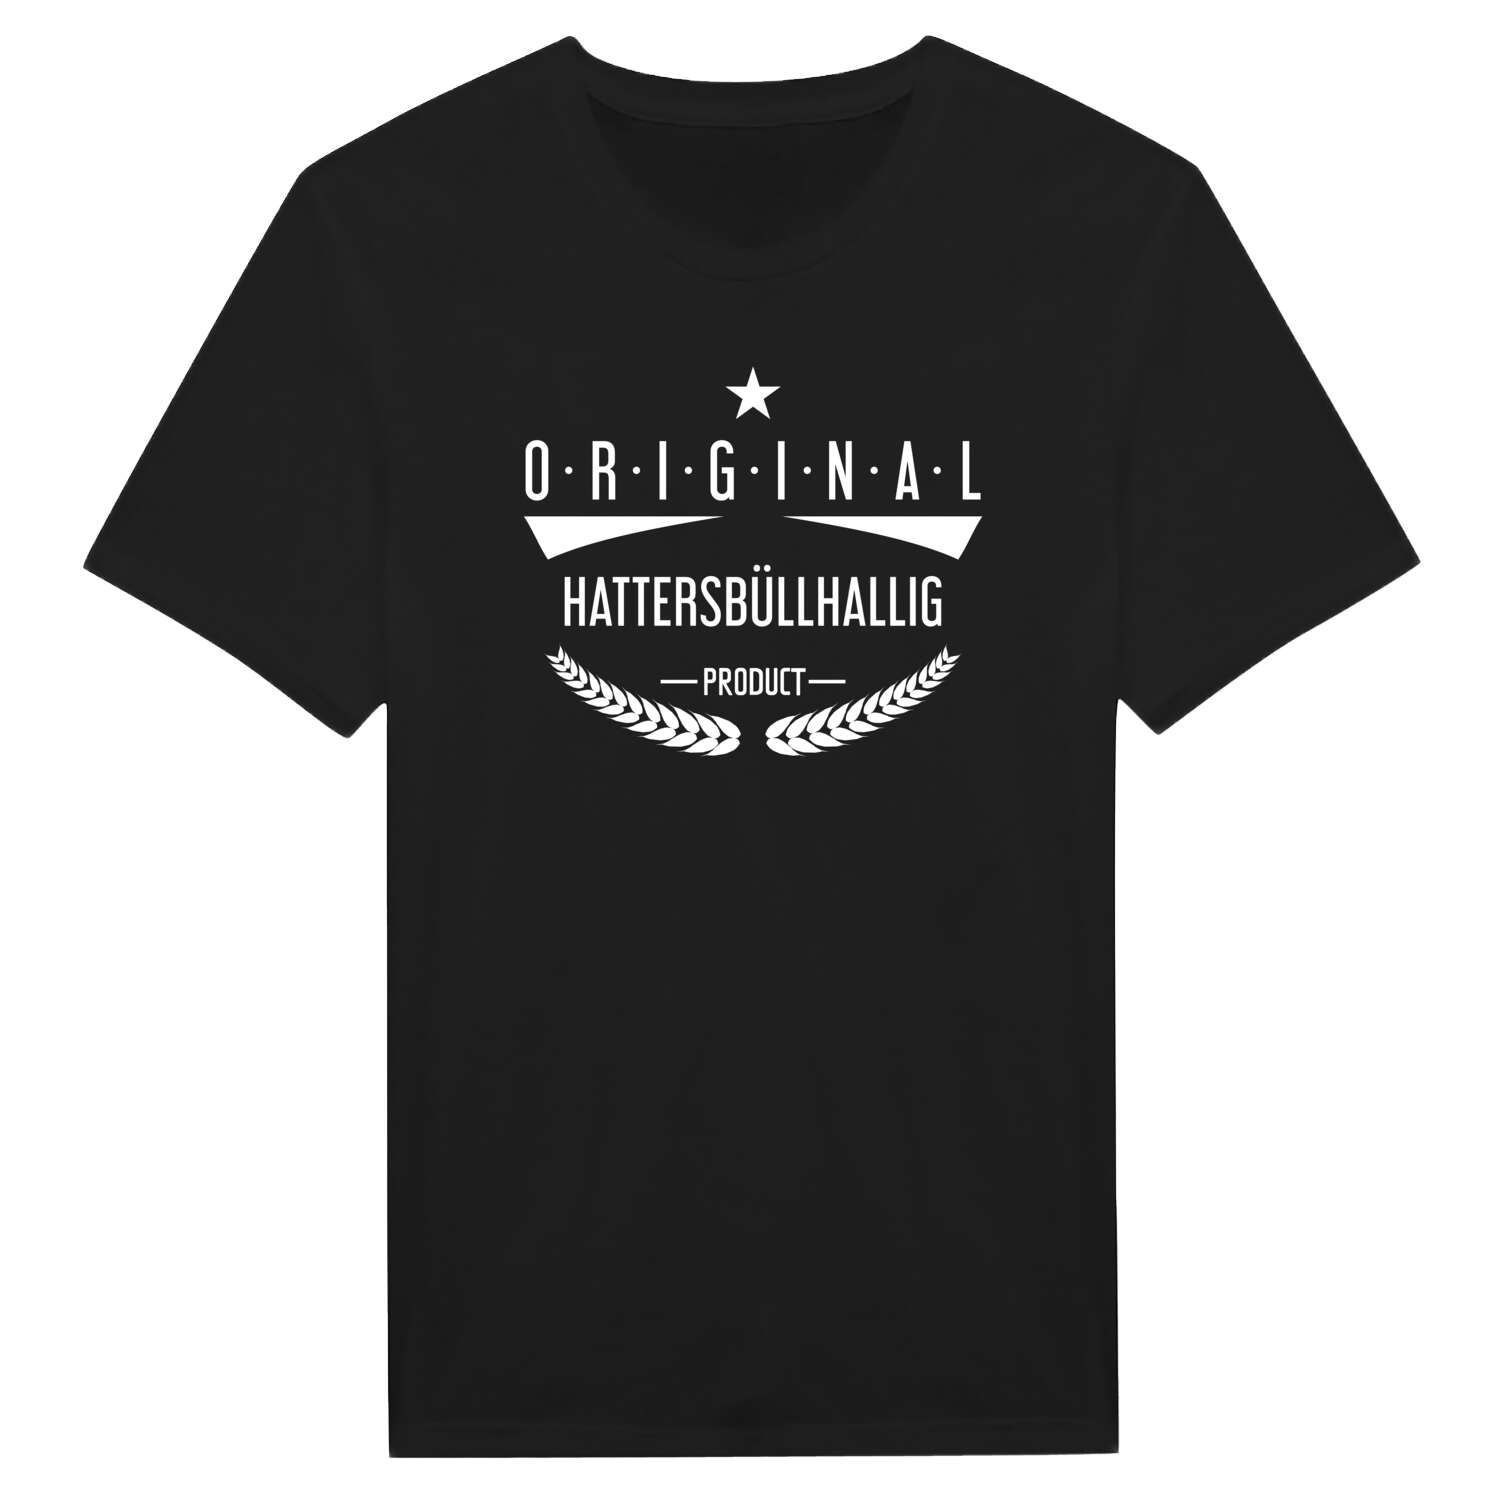 Hattersbüllhallig T-Shirt »Original Product«